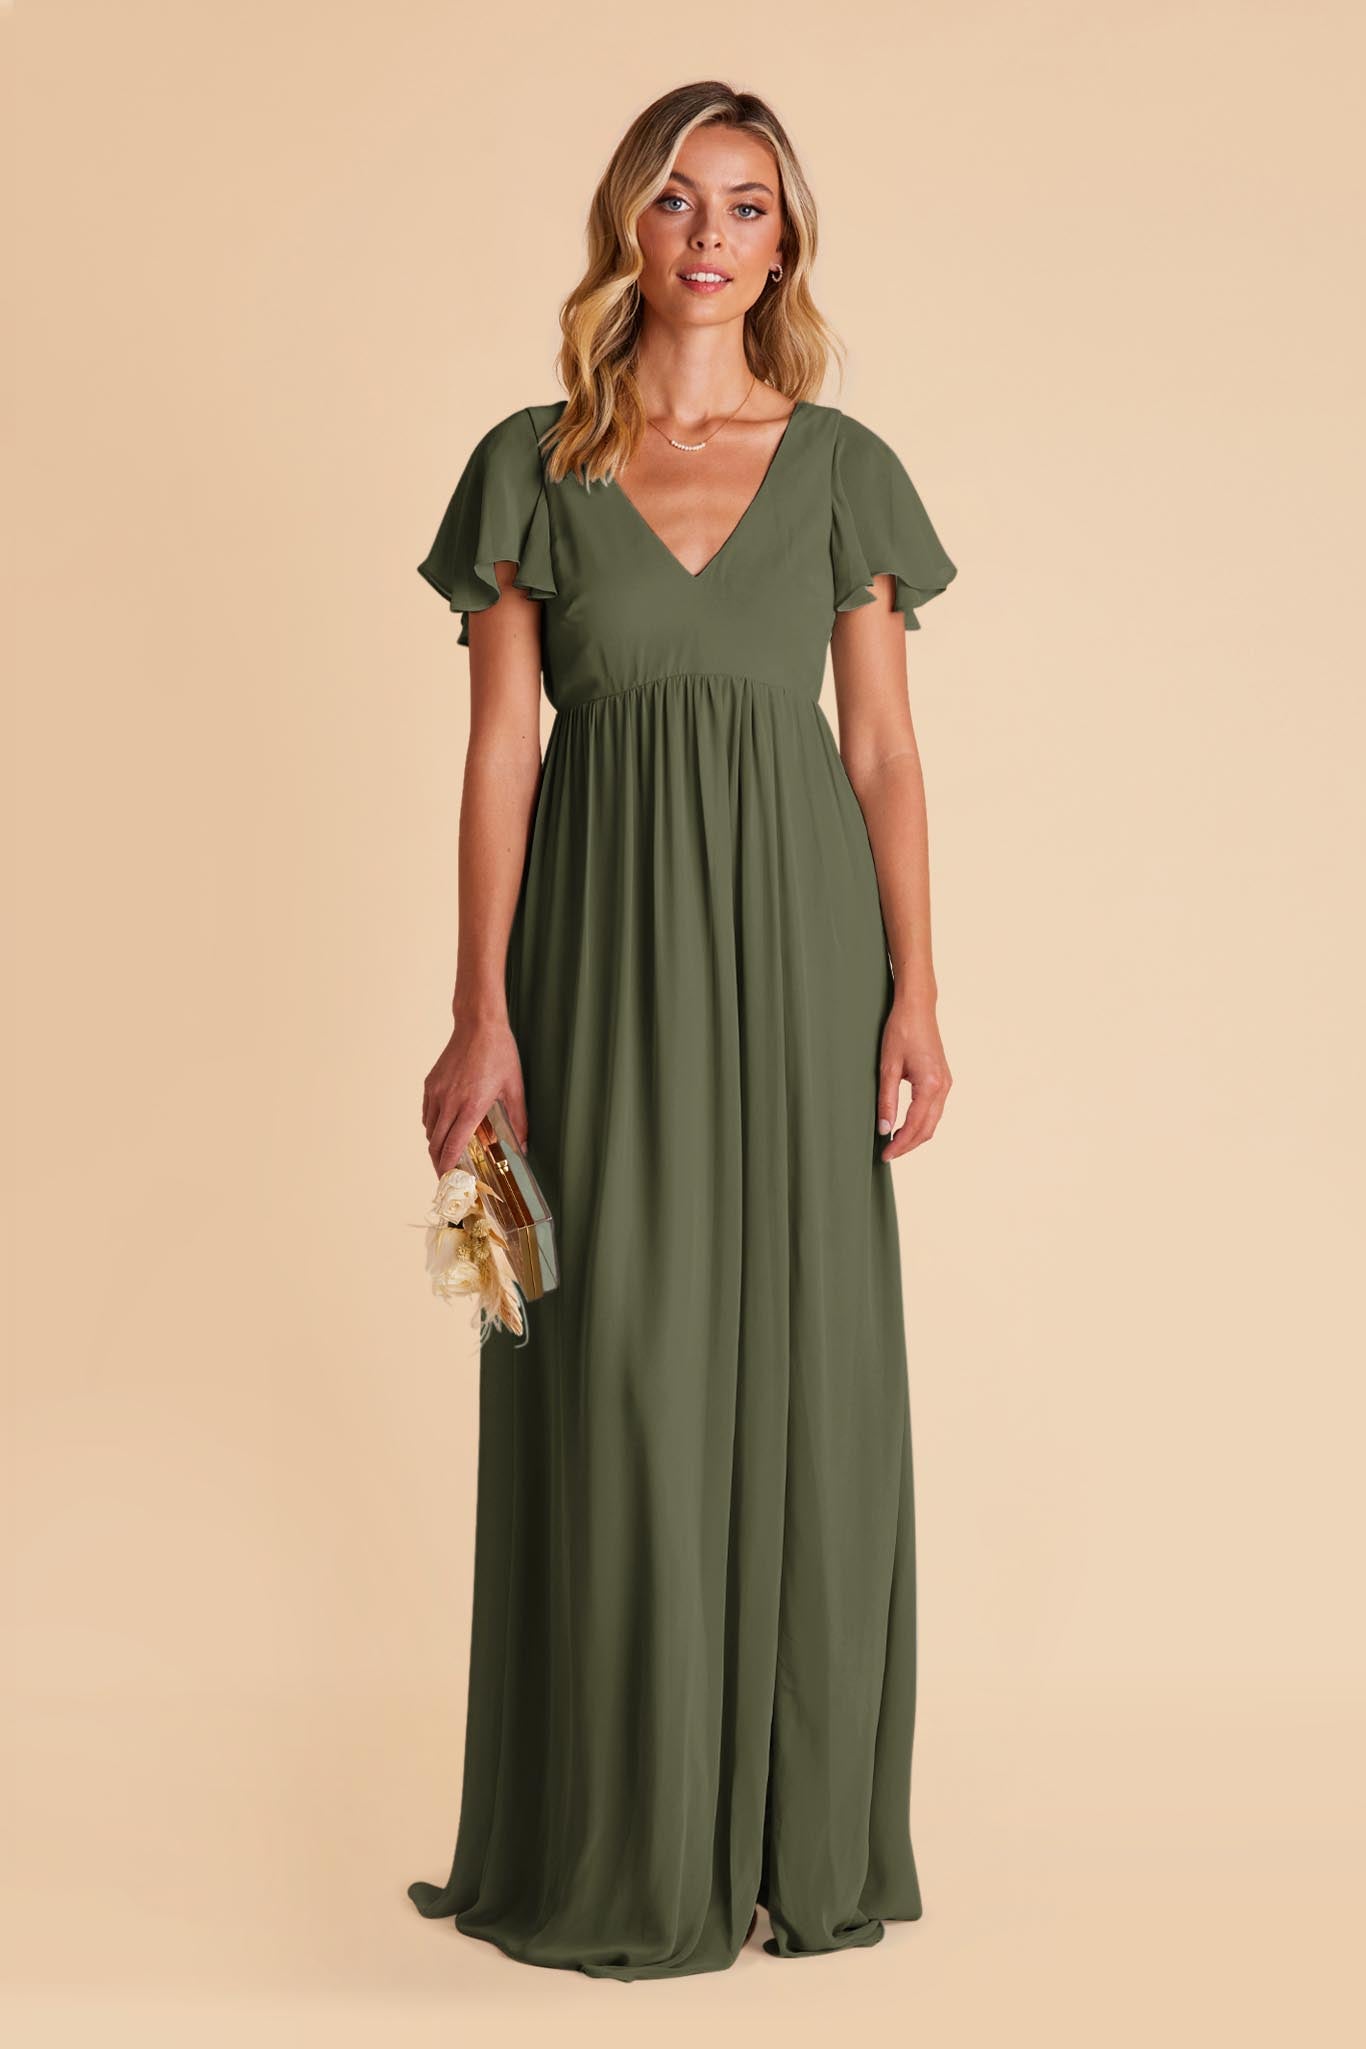 Olive Hannah Empire Dress by Birdy Grey